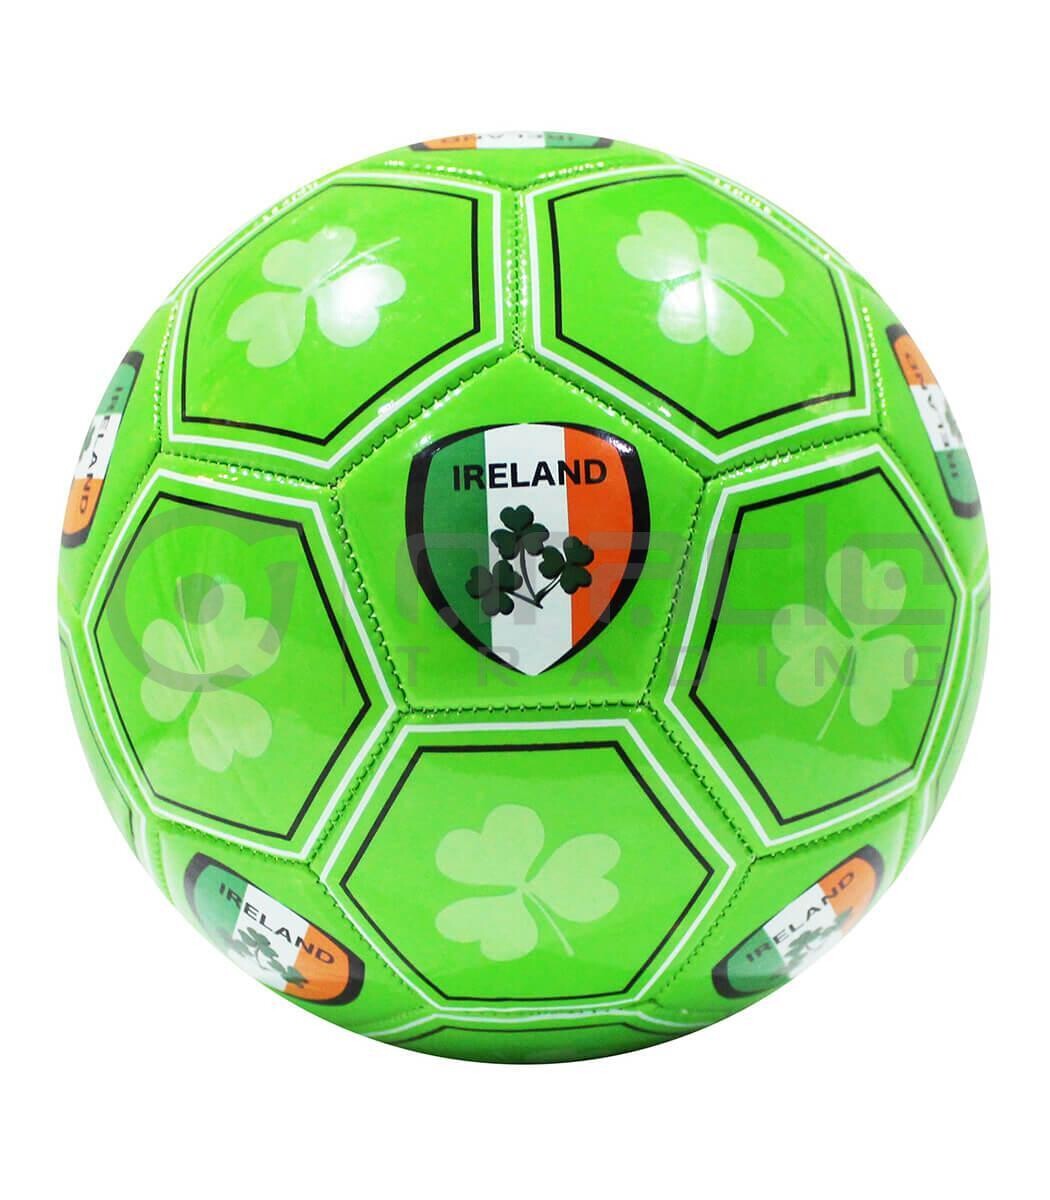 Ireland Large Soccer Ball